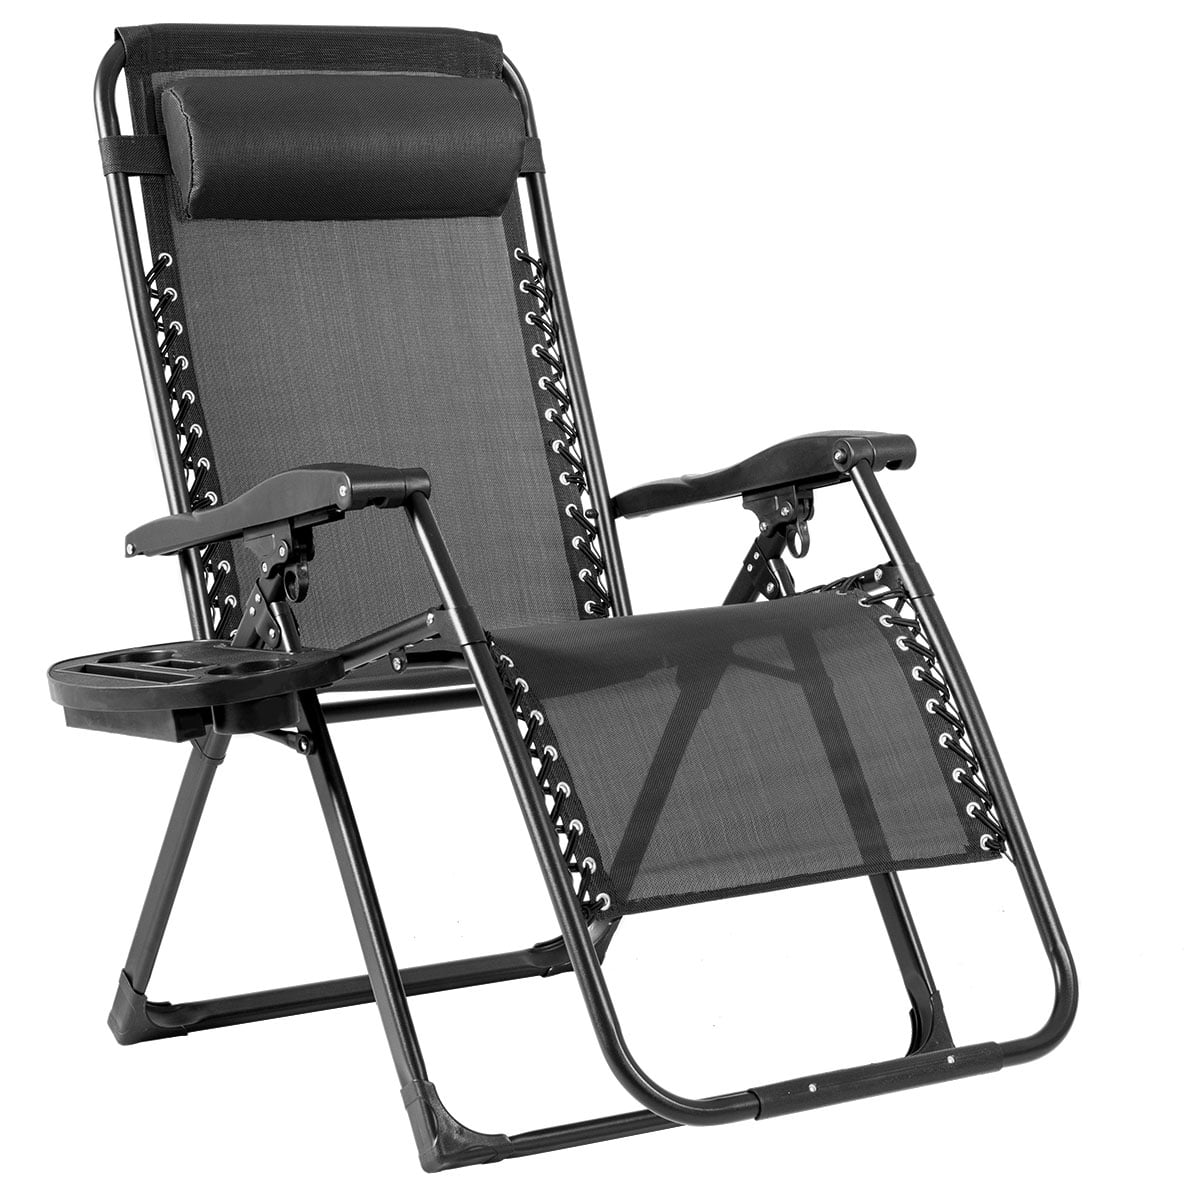 Details about   Zero Gravity Chair Oversize Lounge Chair Patio Heavy Duty Foldable Recline Beige 